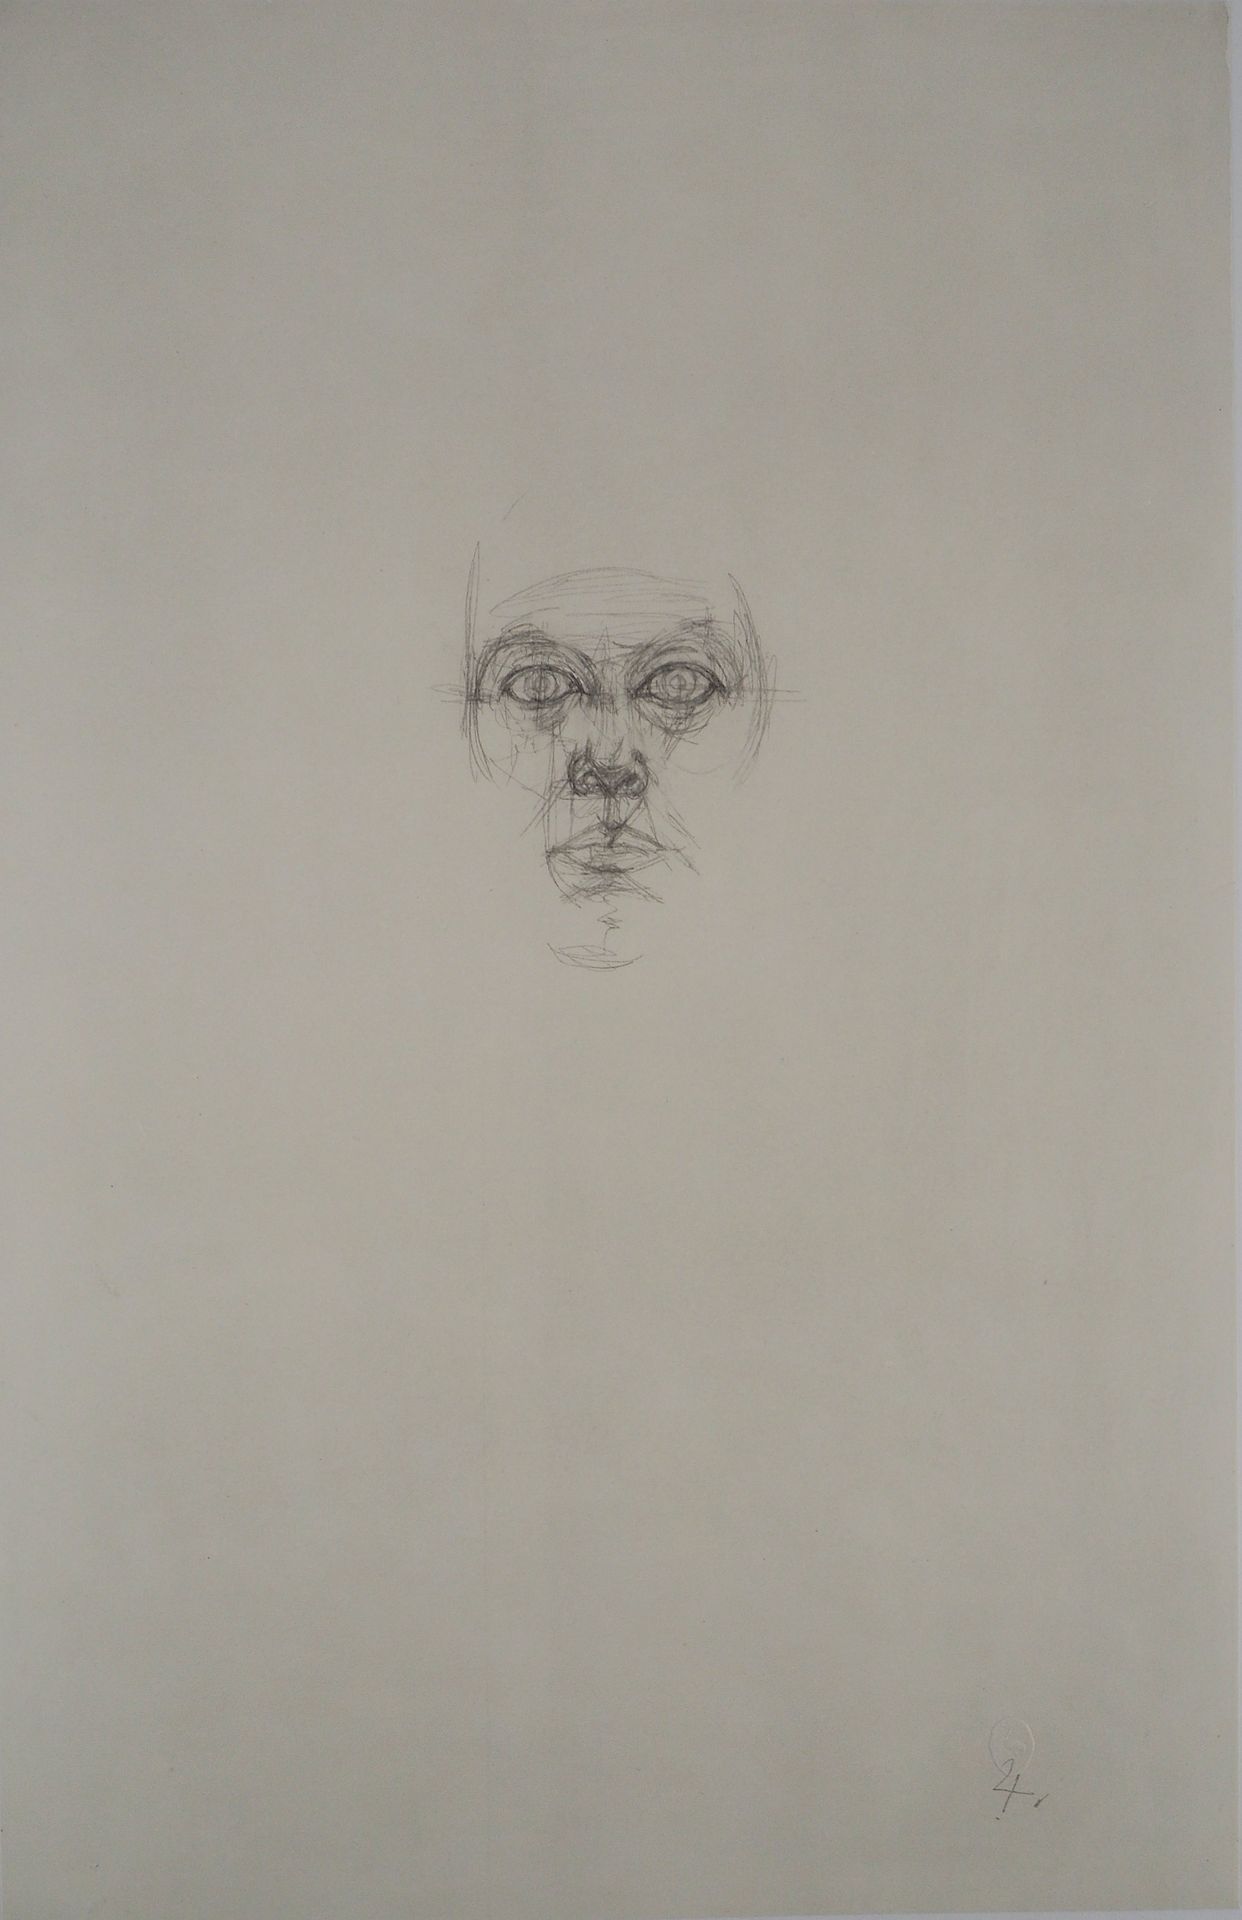 Alberto GIACOMETTI 阿尔贝托-贾科梅蒂（1901-1966）（后）。

脸部素描

根据艺术家的画作制作的石版画

厚纸上 50 x 32 c&hellip;